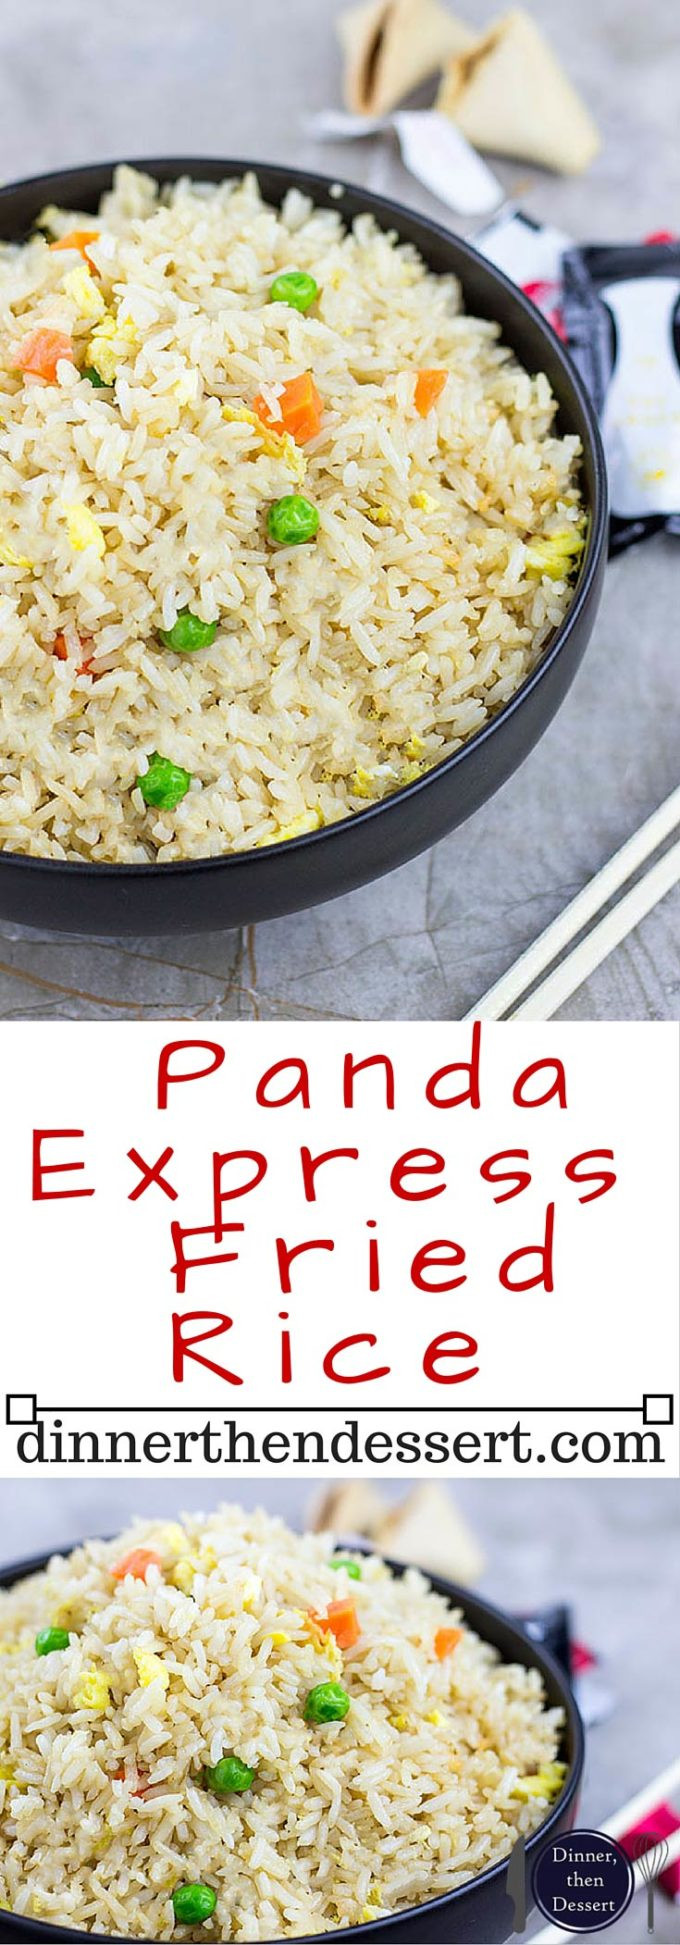 Panda Express Fried Rice Recipes
 Panda Express Fried Rice Copycat Dinner then Dessert